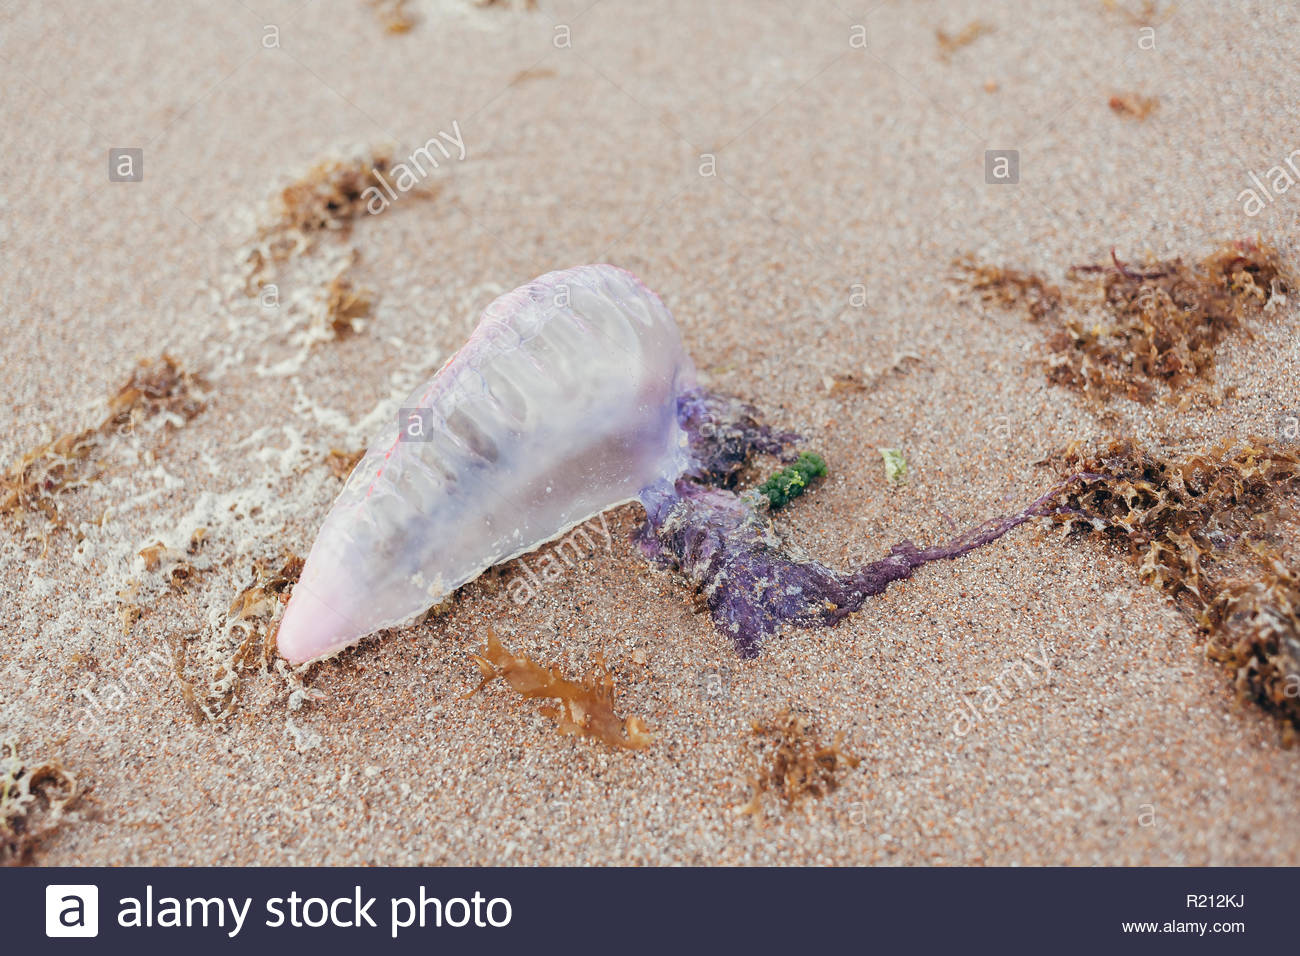 man of war jellyfish on beach